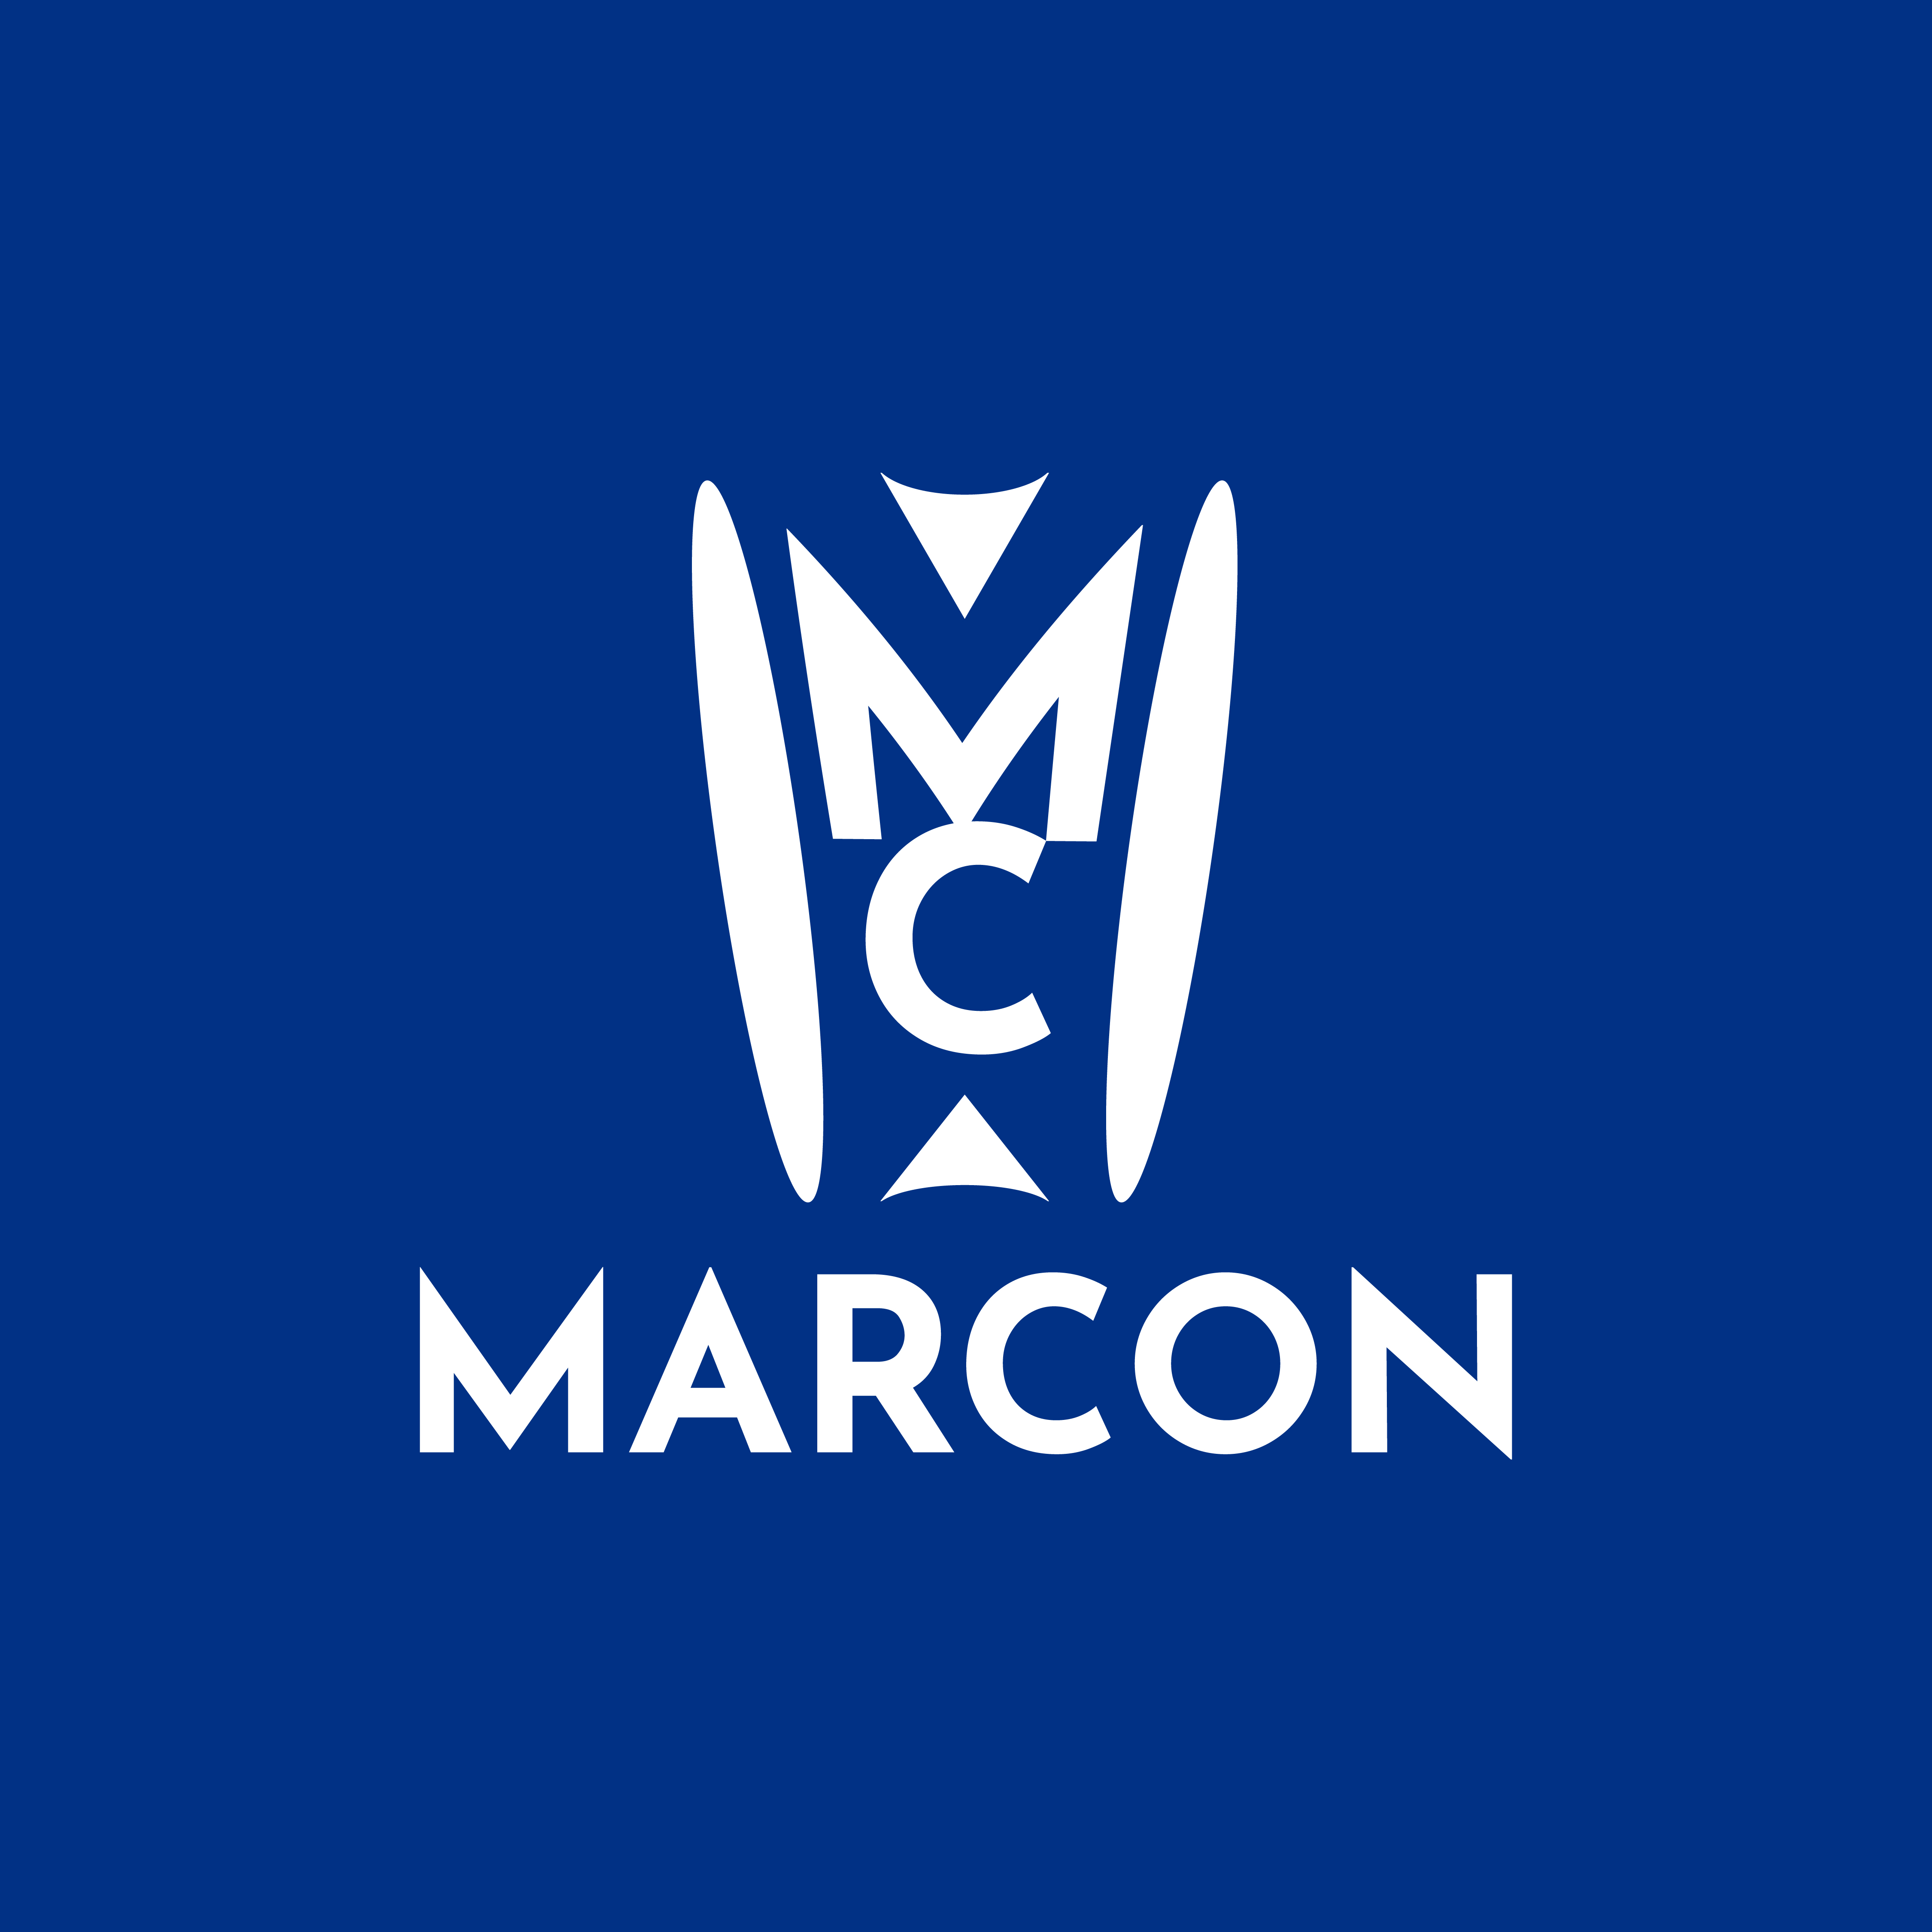 MARCON_LOGO_BLACK_1080x1080-06